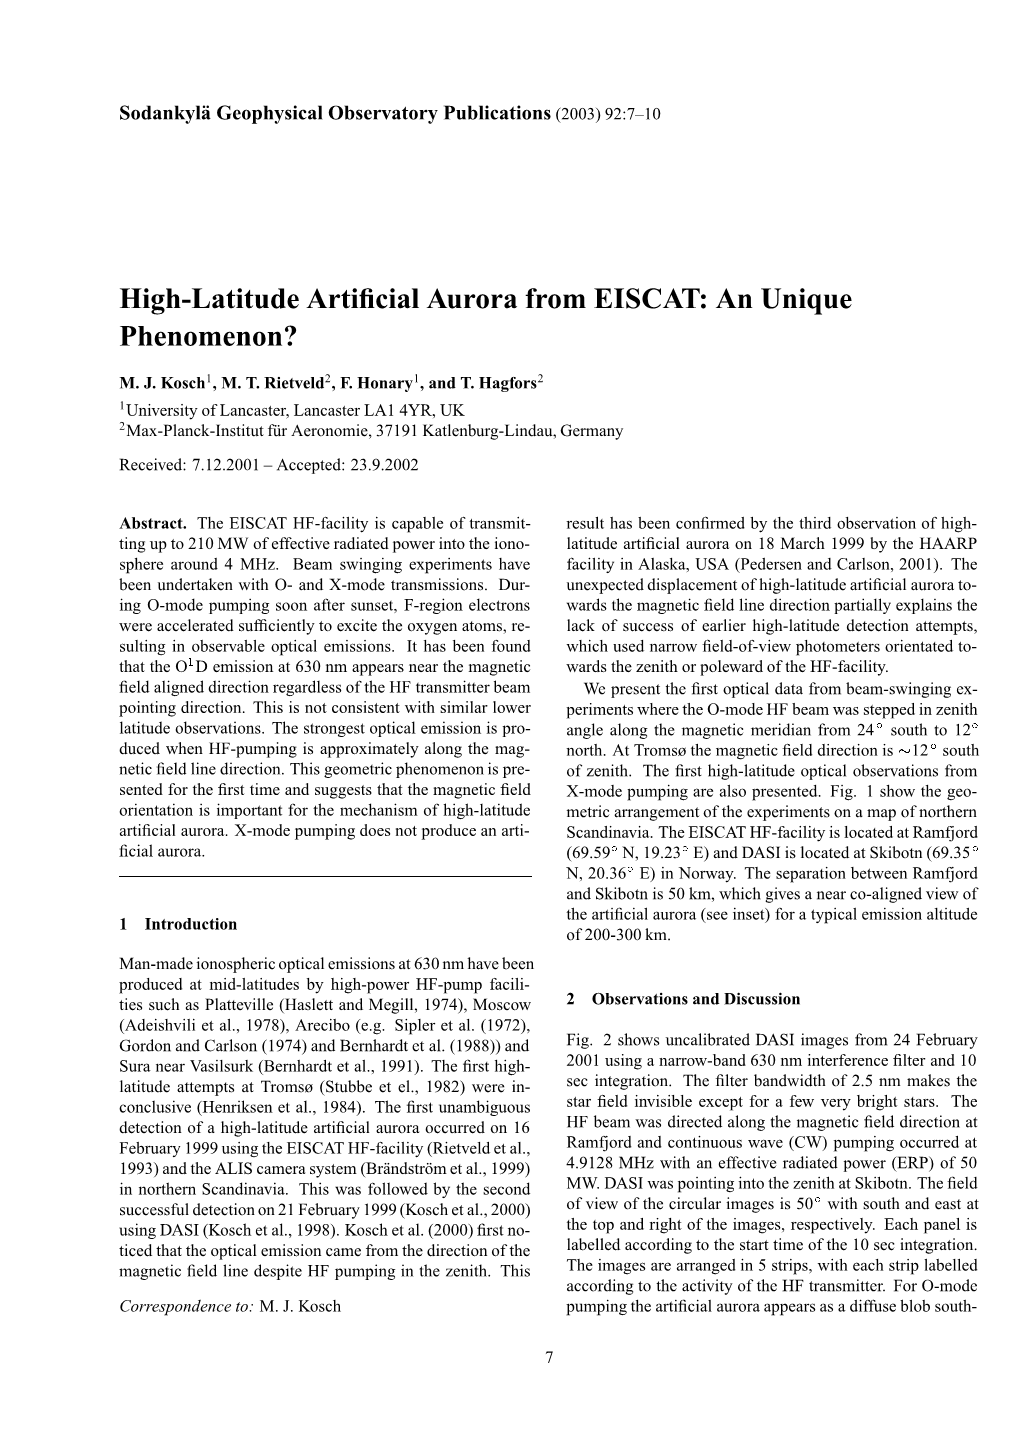 High-Latitude Artificial Aurora from EISCAT: an Unique Phenomenon?